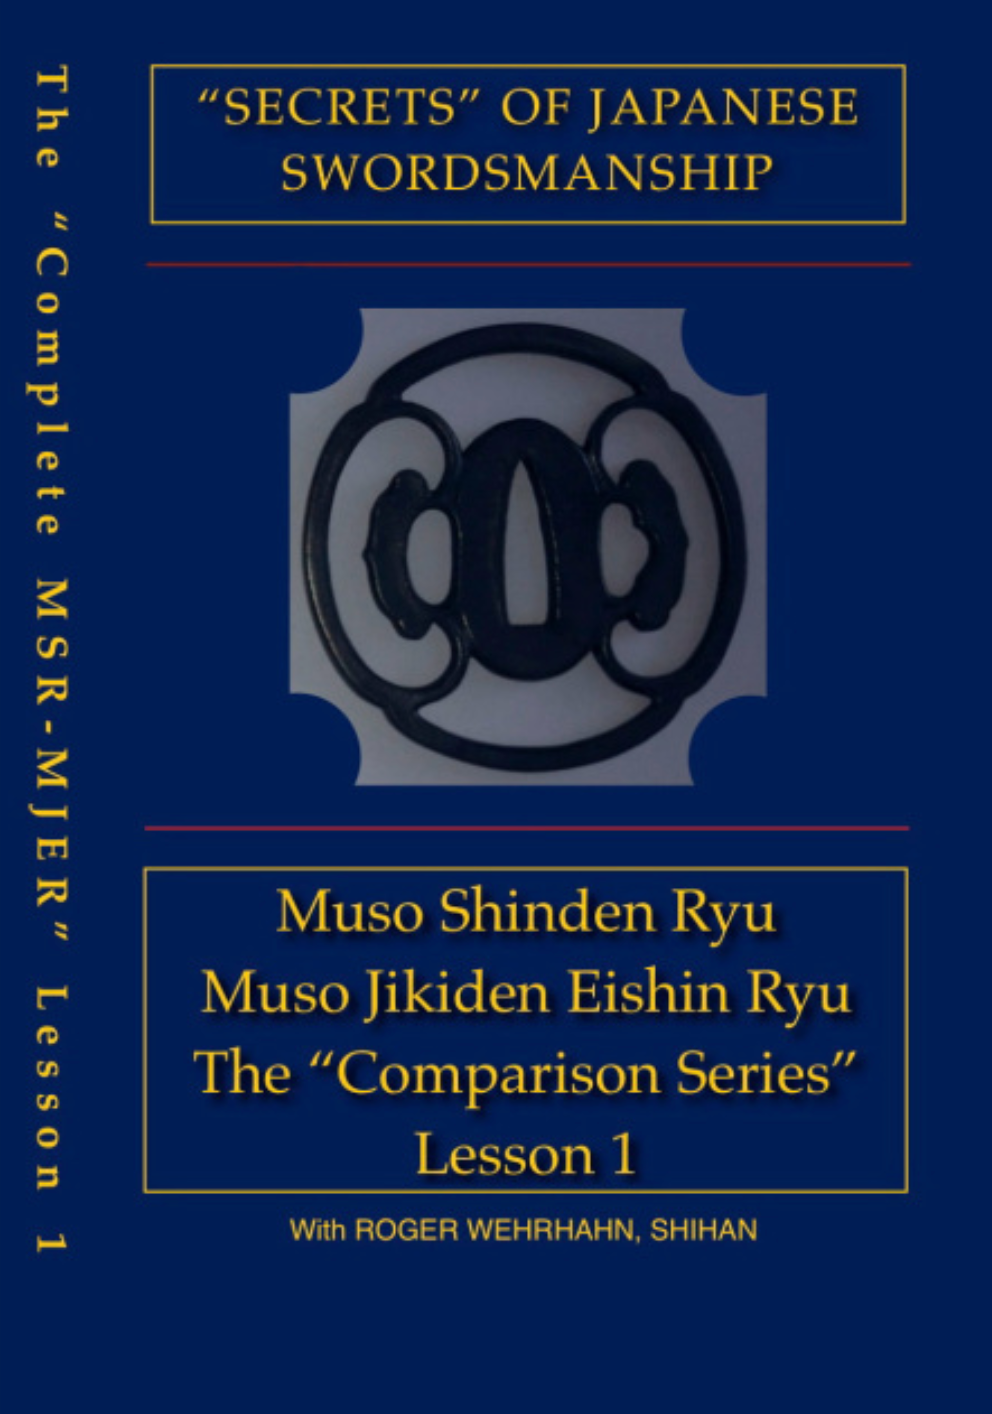 Japanese Swordsmanship Muso Shinden Ryu-Muso Jikiden Eishin Ryu Comparison Series DVD by Roger Wehrhahn (12 Volumes Available) - Budovideos Inc